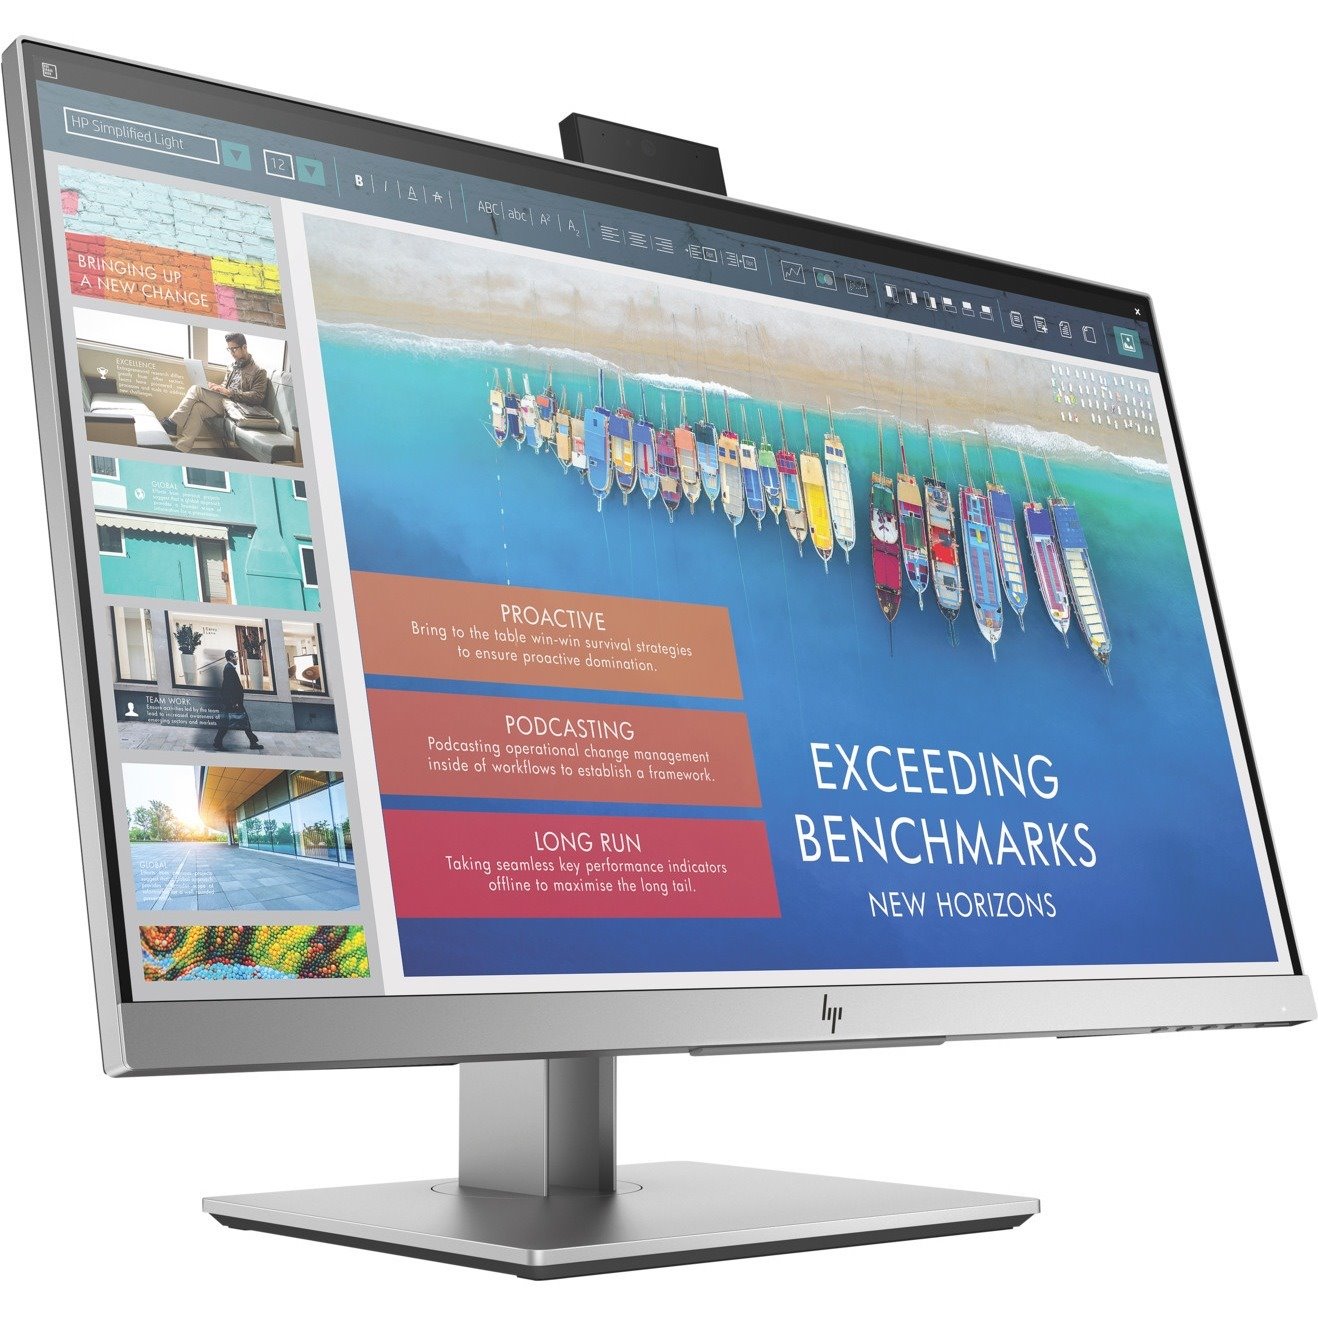 HP Business E243d 24" Class Webcam Full HD LCD Monitor - 16:9 - Silver, Black